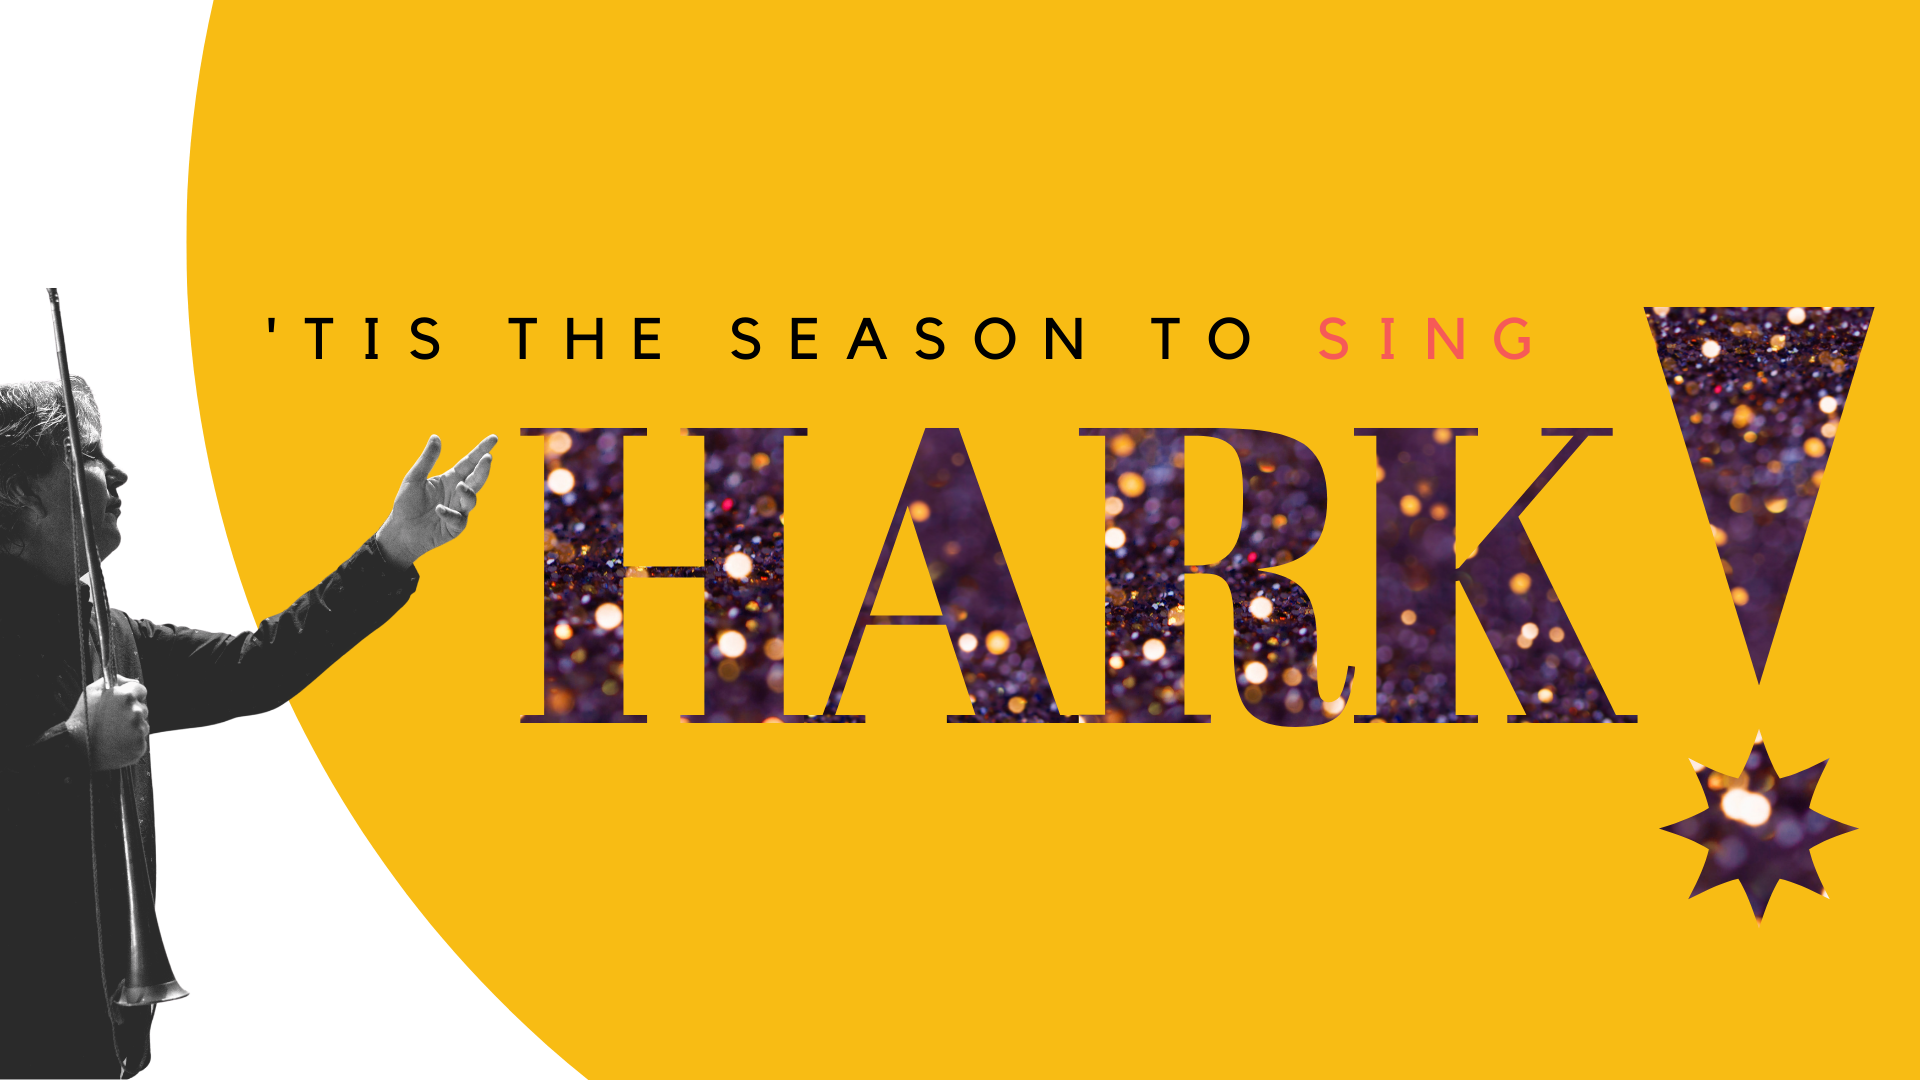 Hark! – Mon 20 Dec, 6pm at the Garrison Church, Millers Point